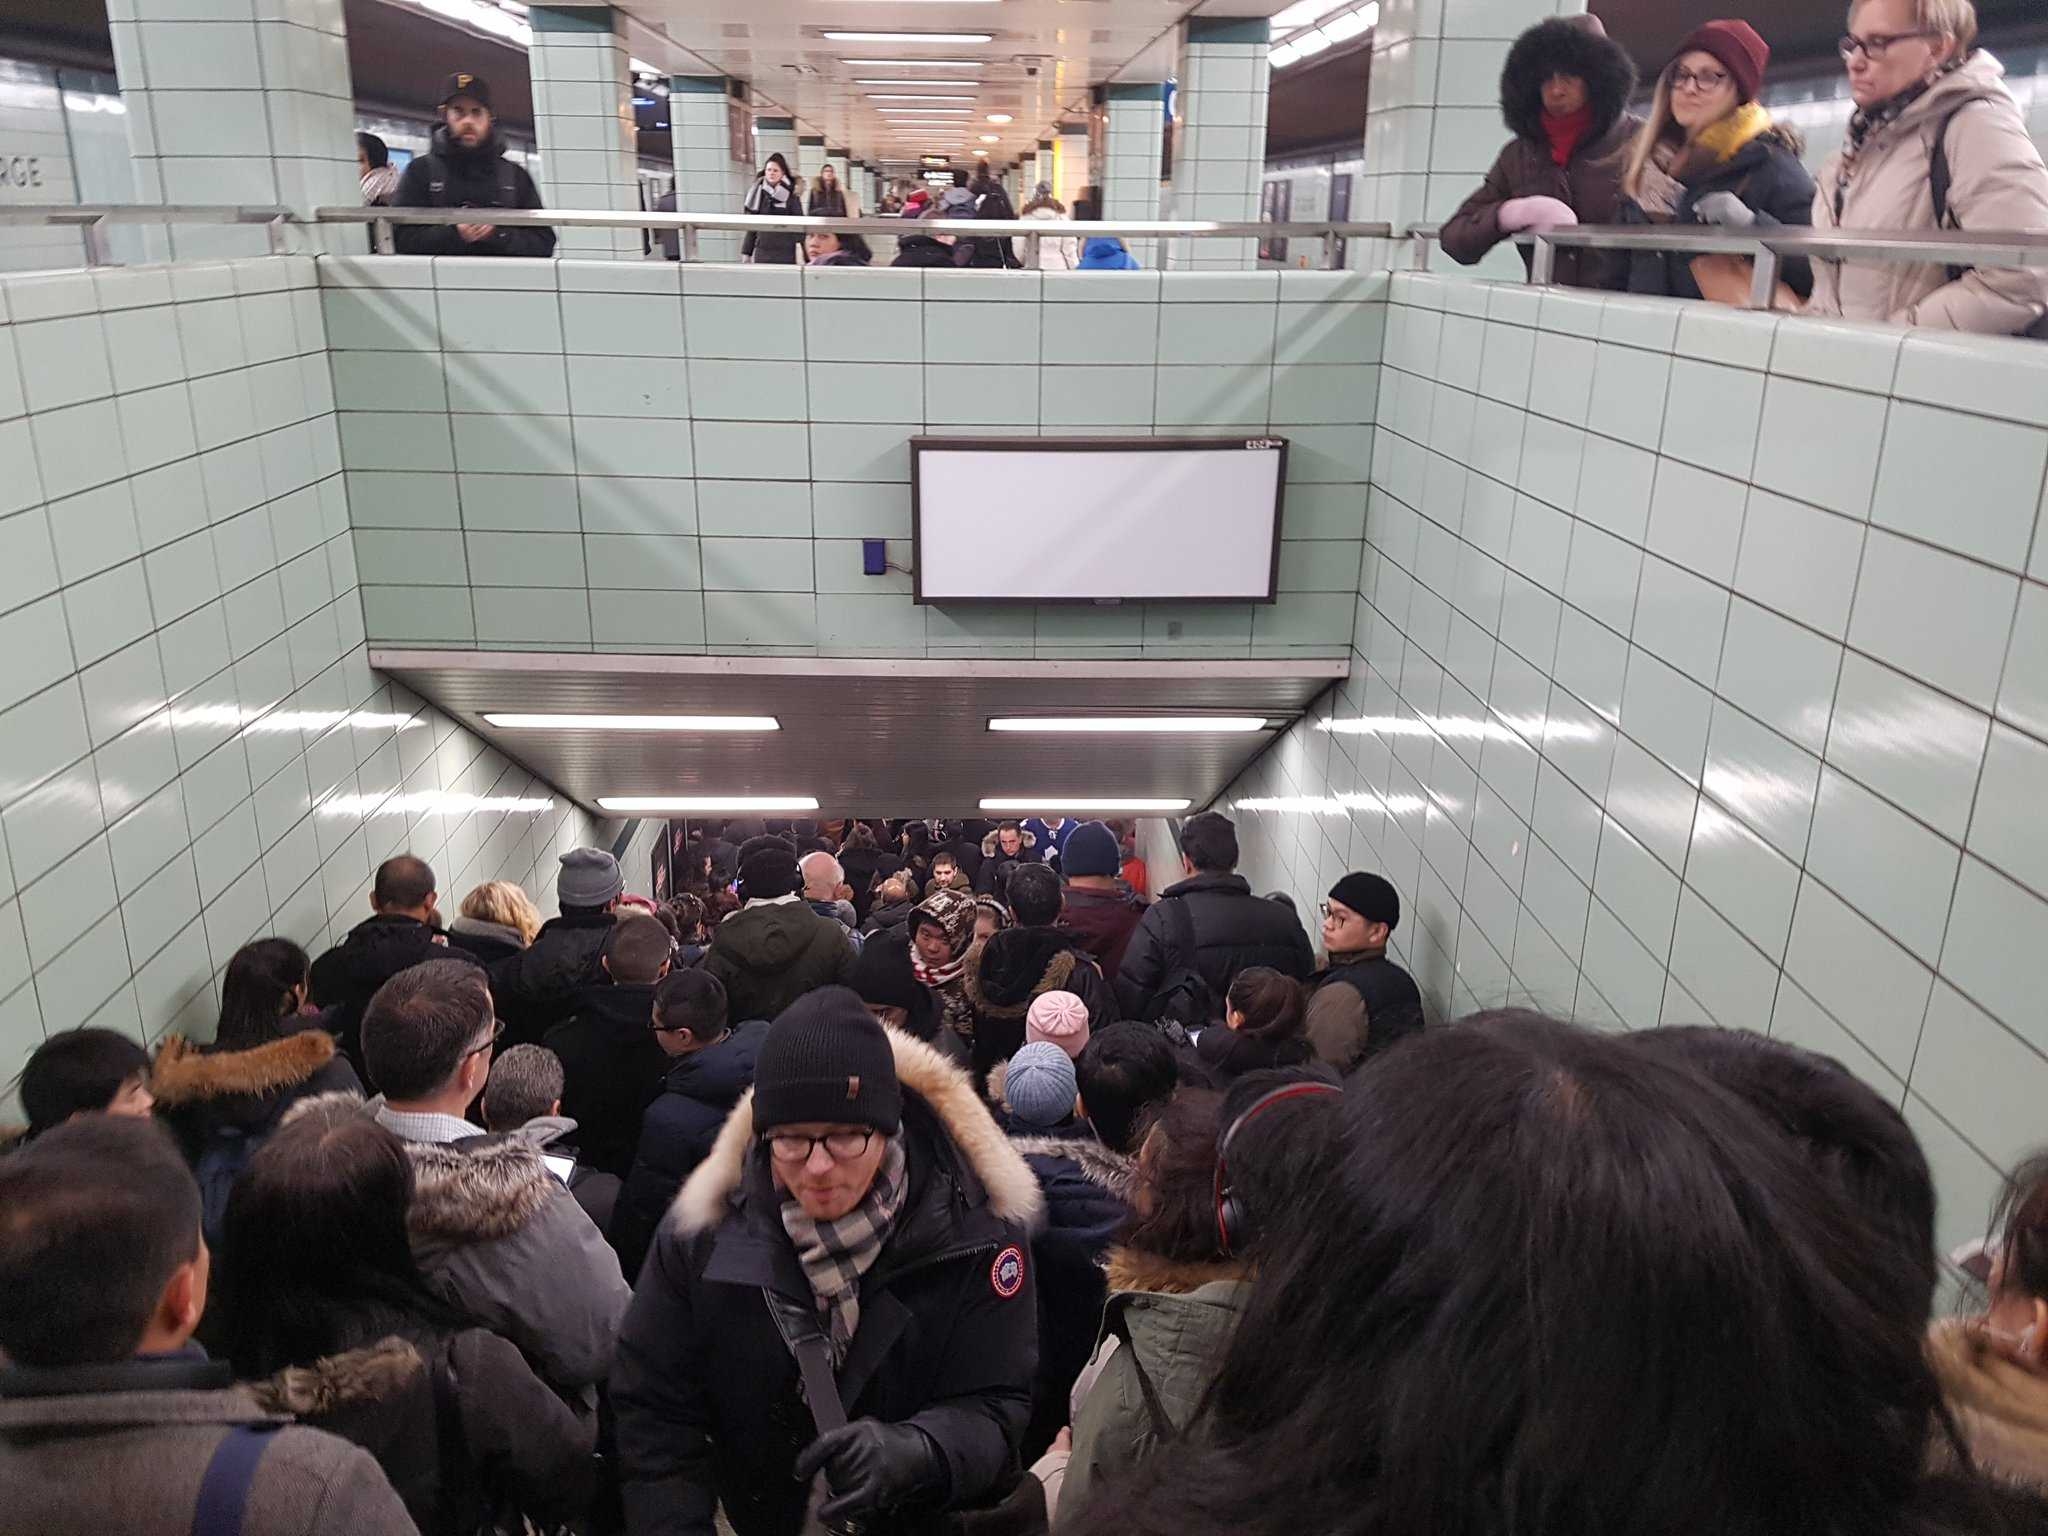 TTC subway issues and massive crowds